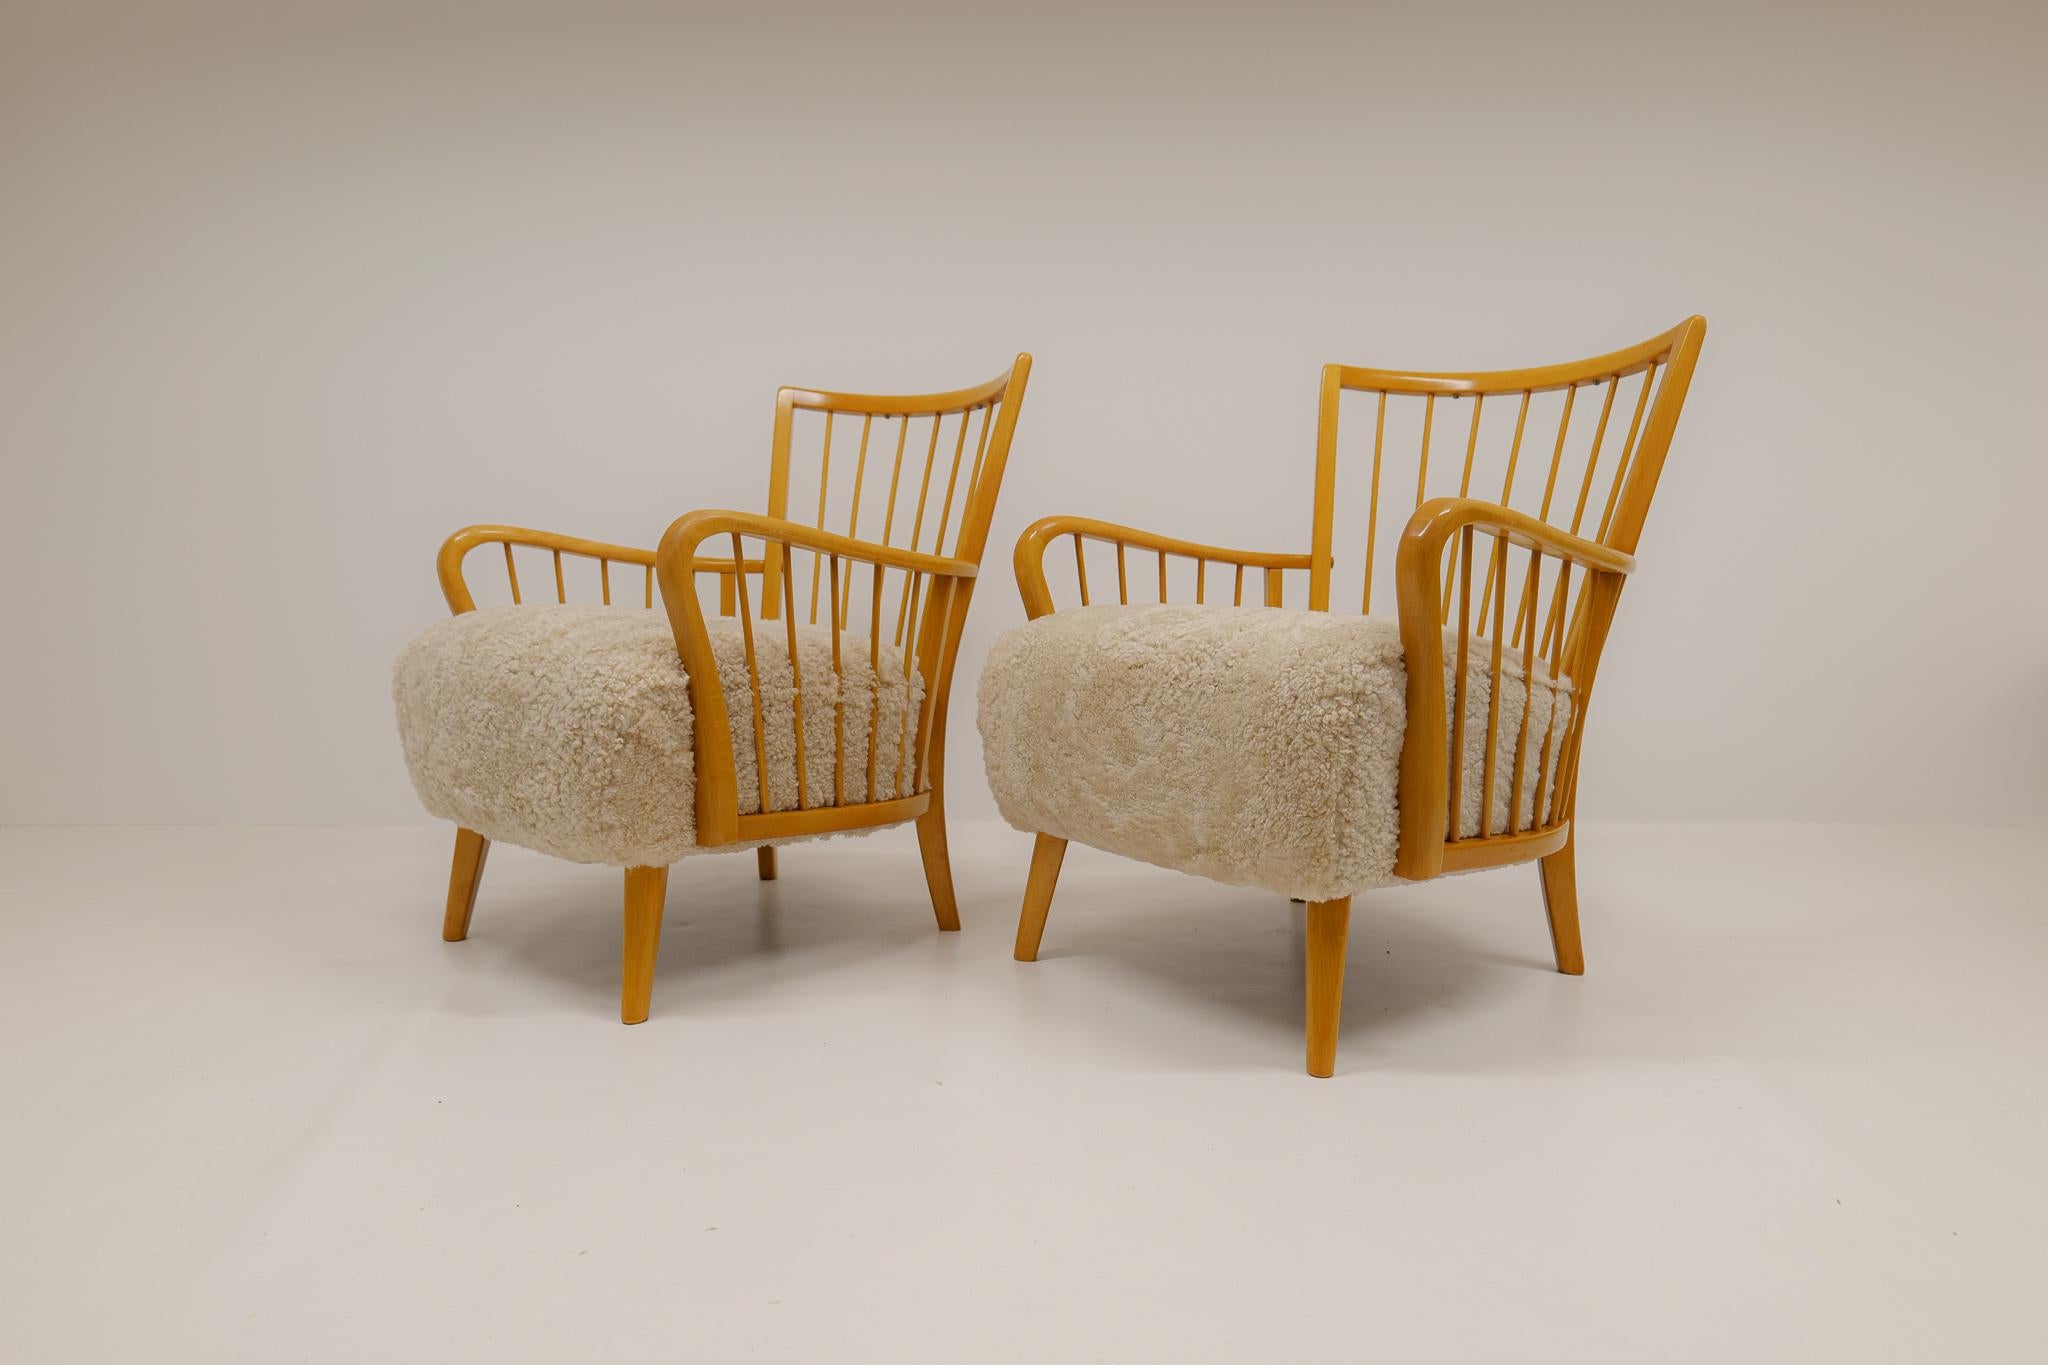 Art Deco Swedish Grace Lounge Chairs in Shearling / Sheepskin 1940s Sweden For Sale 1